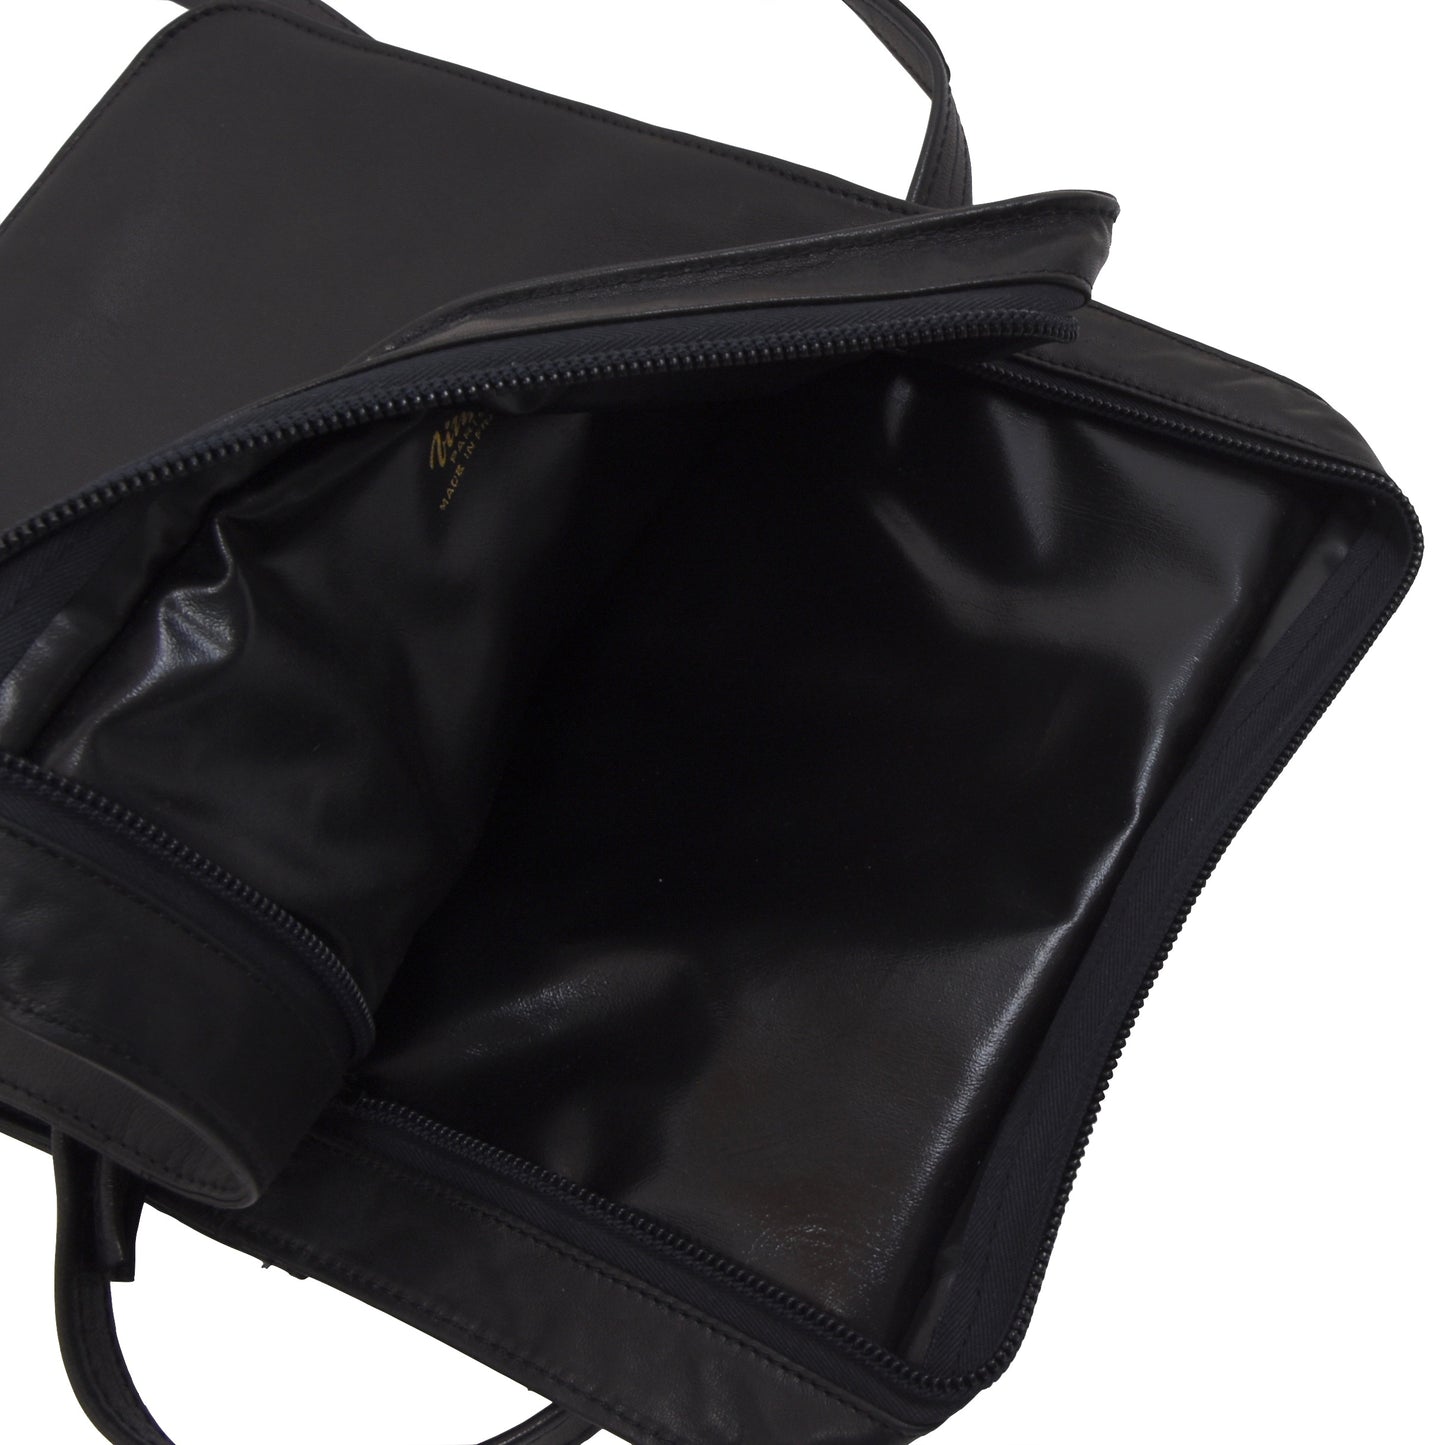 Vimar Paris Lightweight Leather Bag - Black